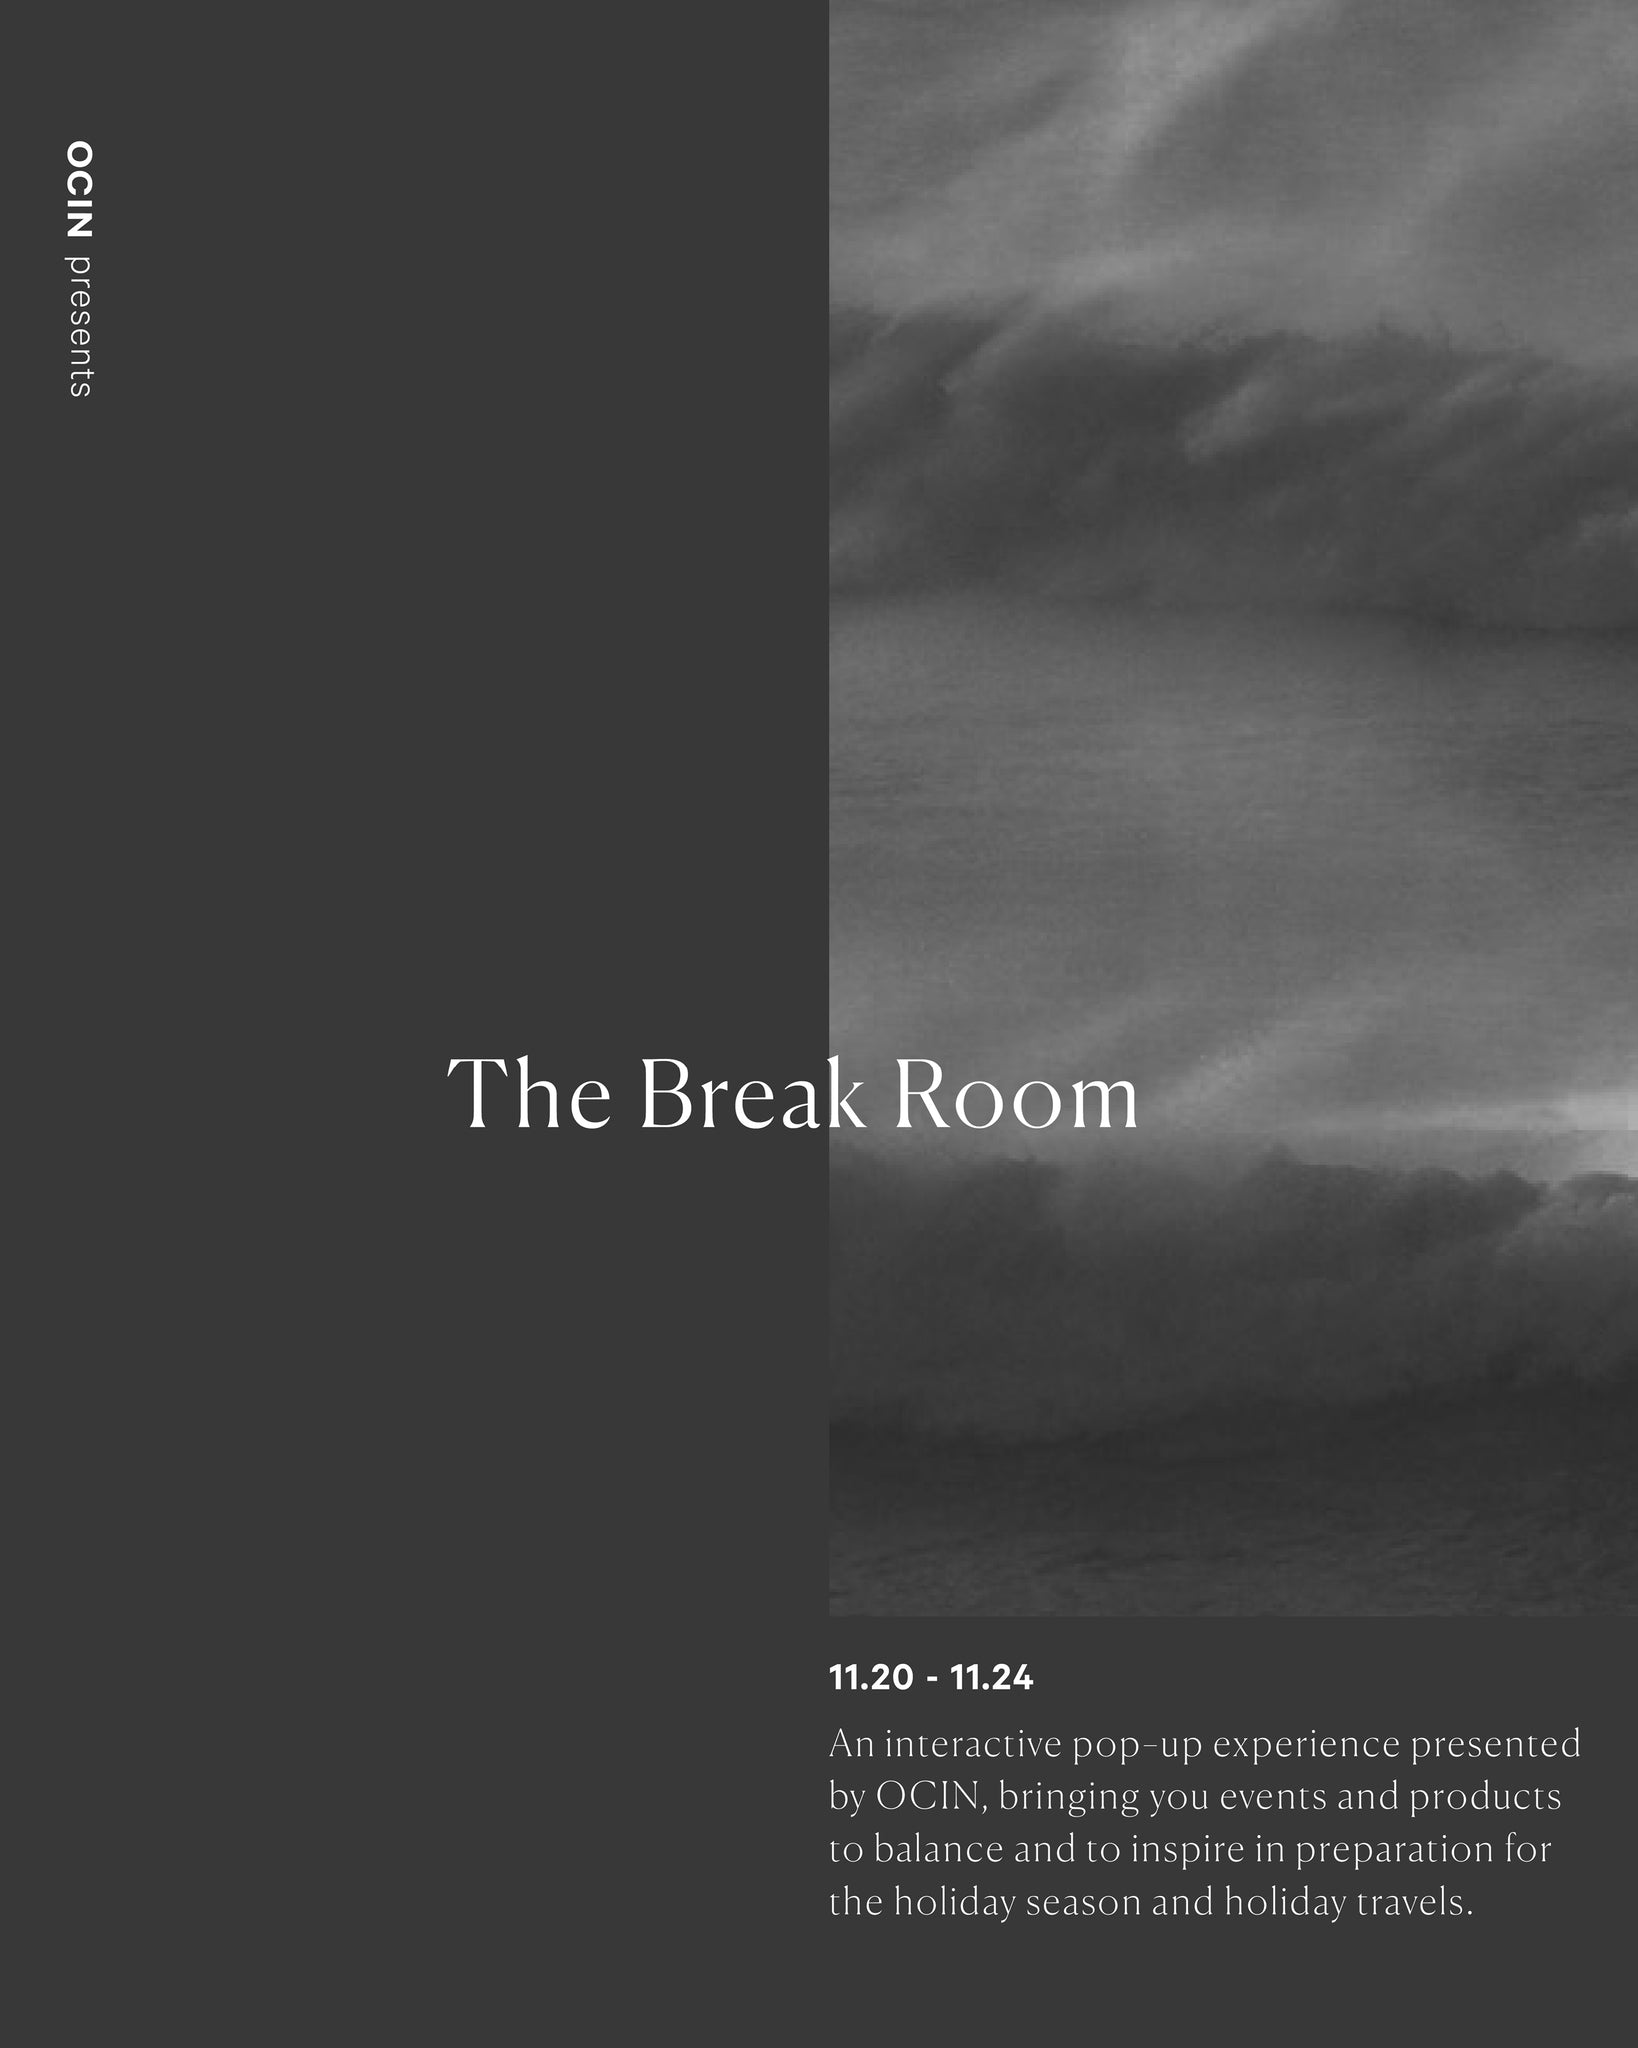 OCIN presents The Break Room